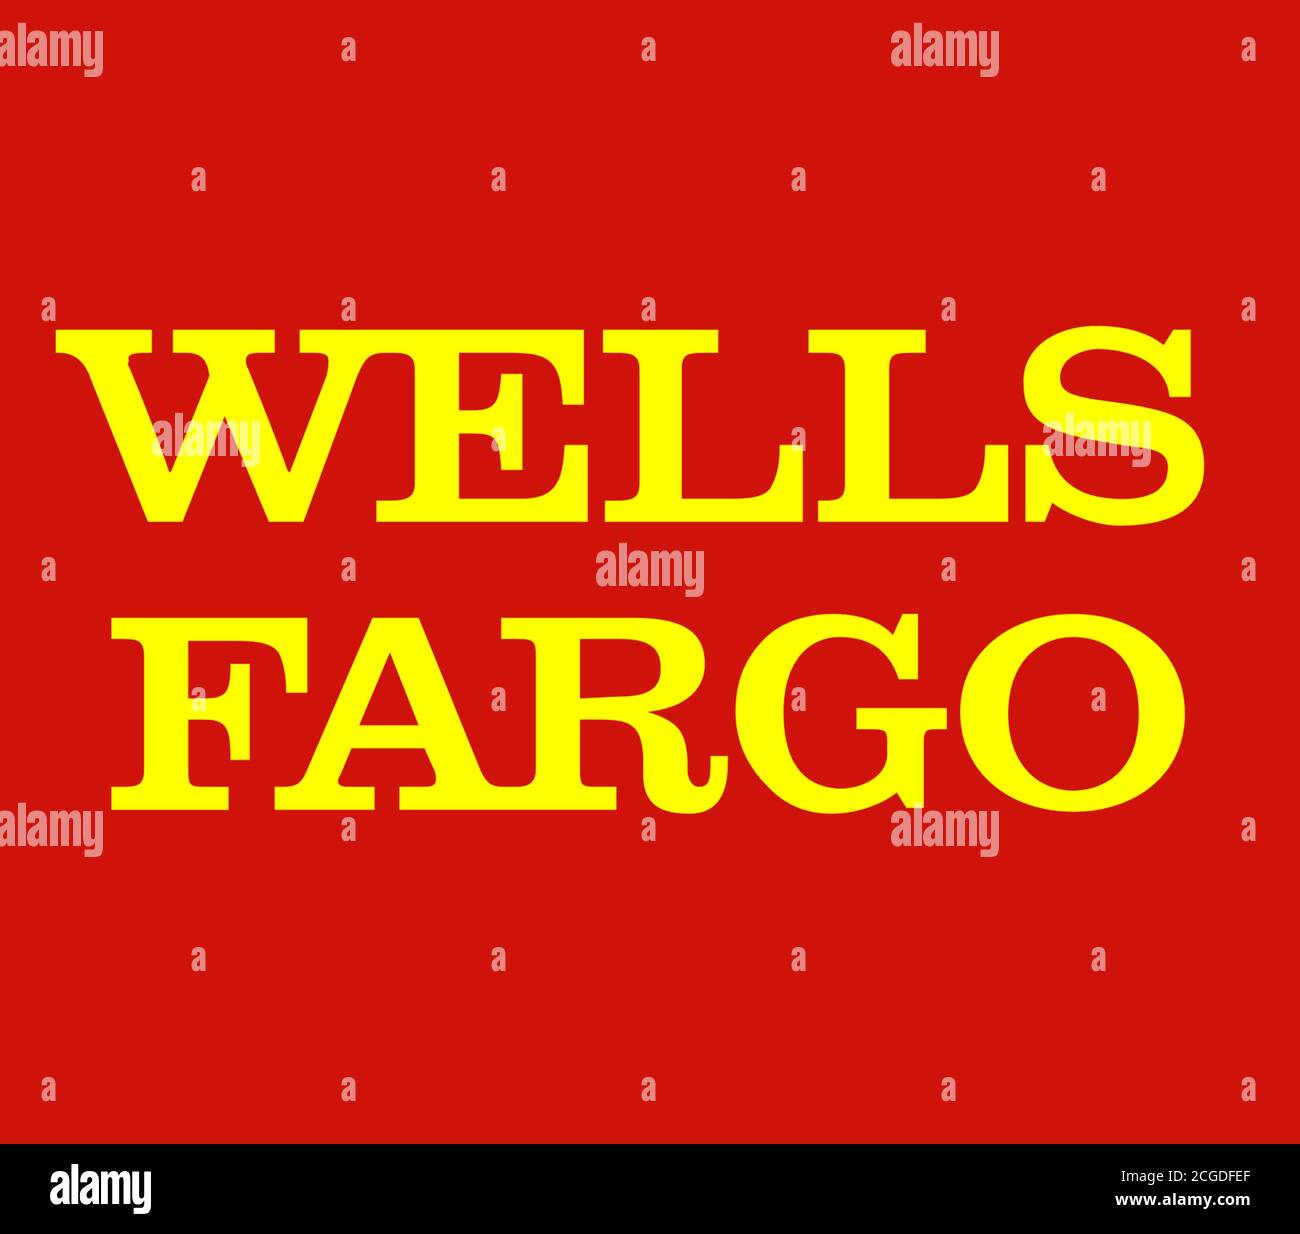 Wells Fargo Stock Photo